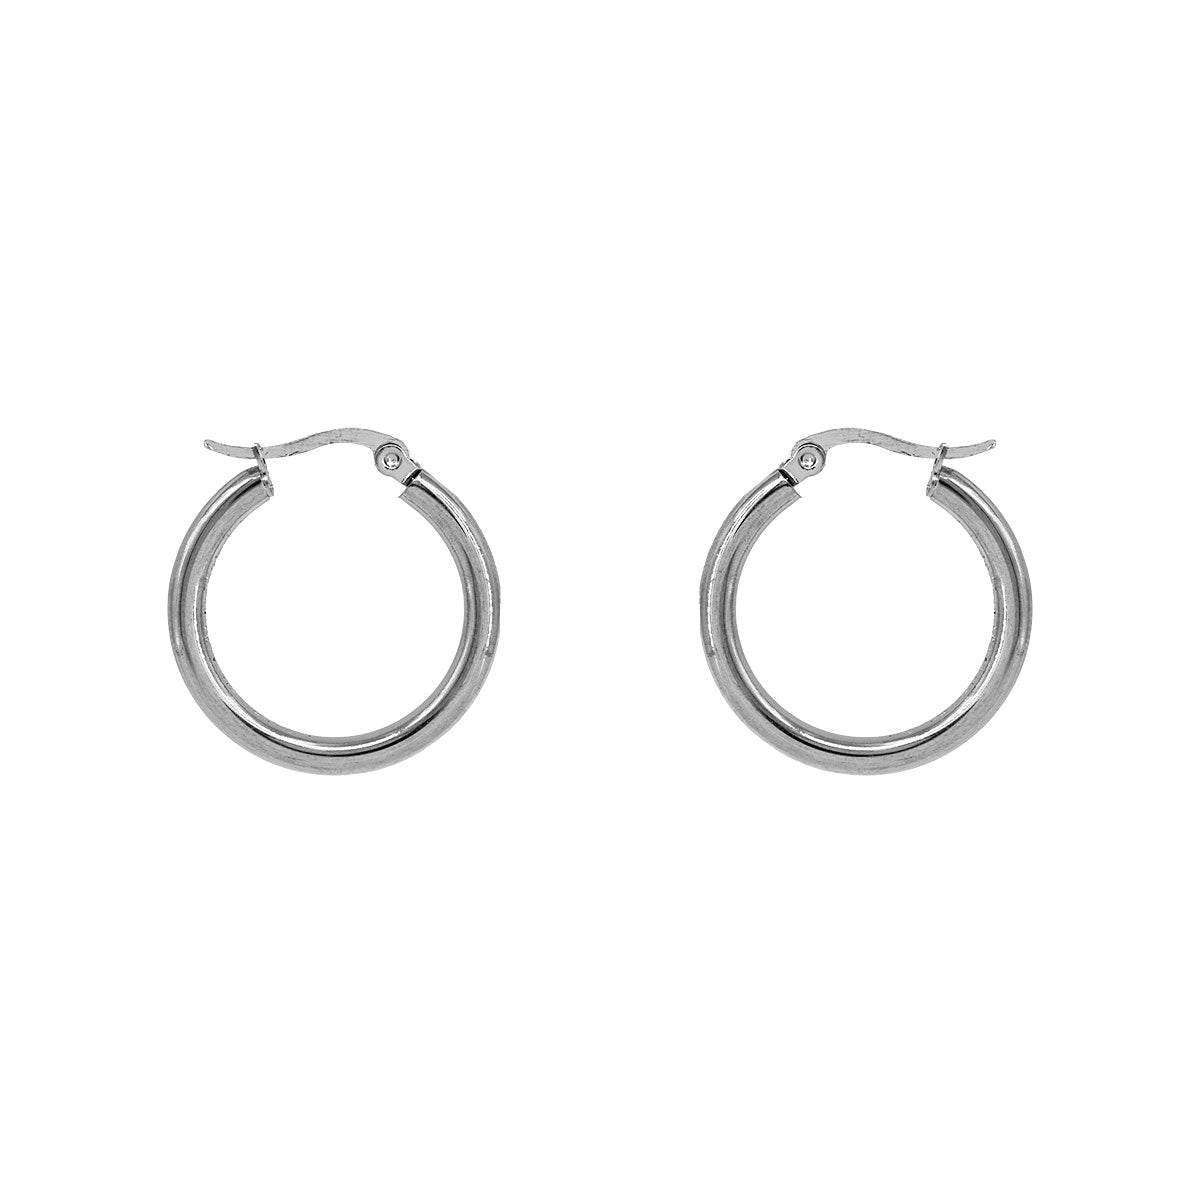 Mara earrings 2 sizes